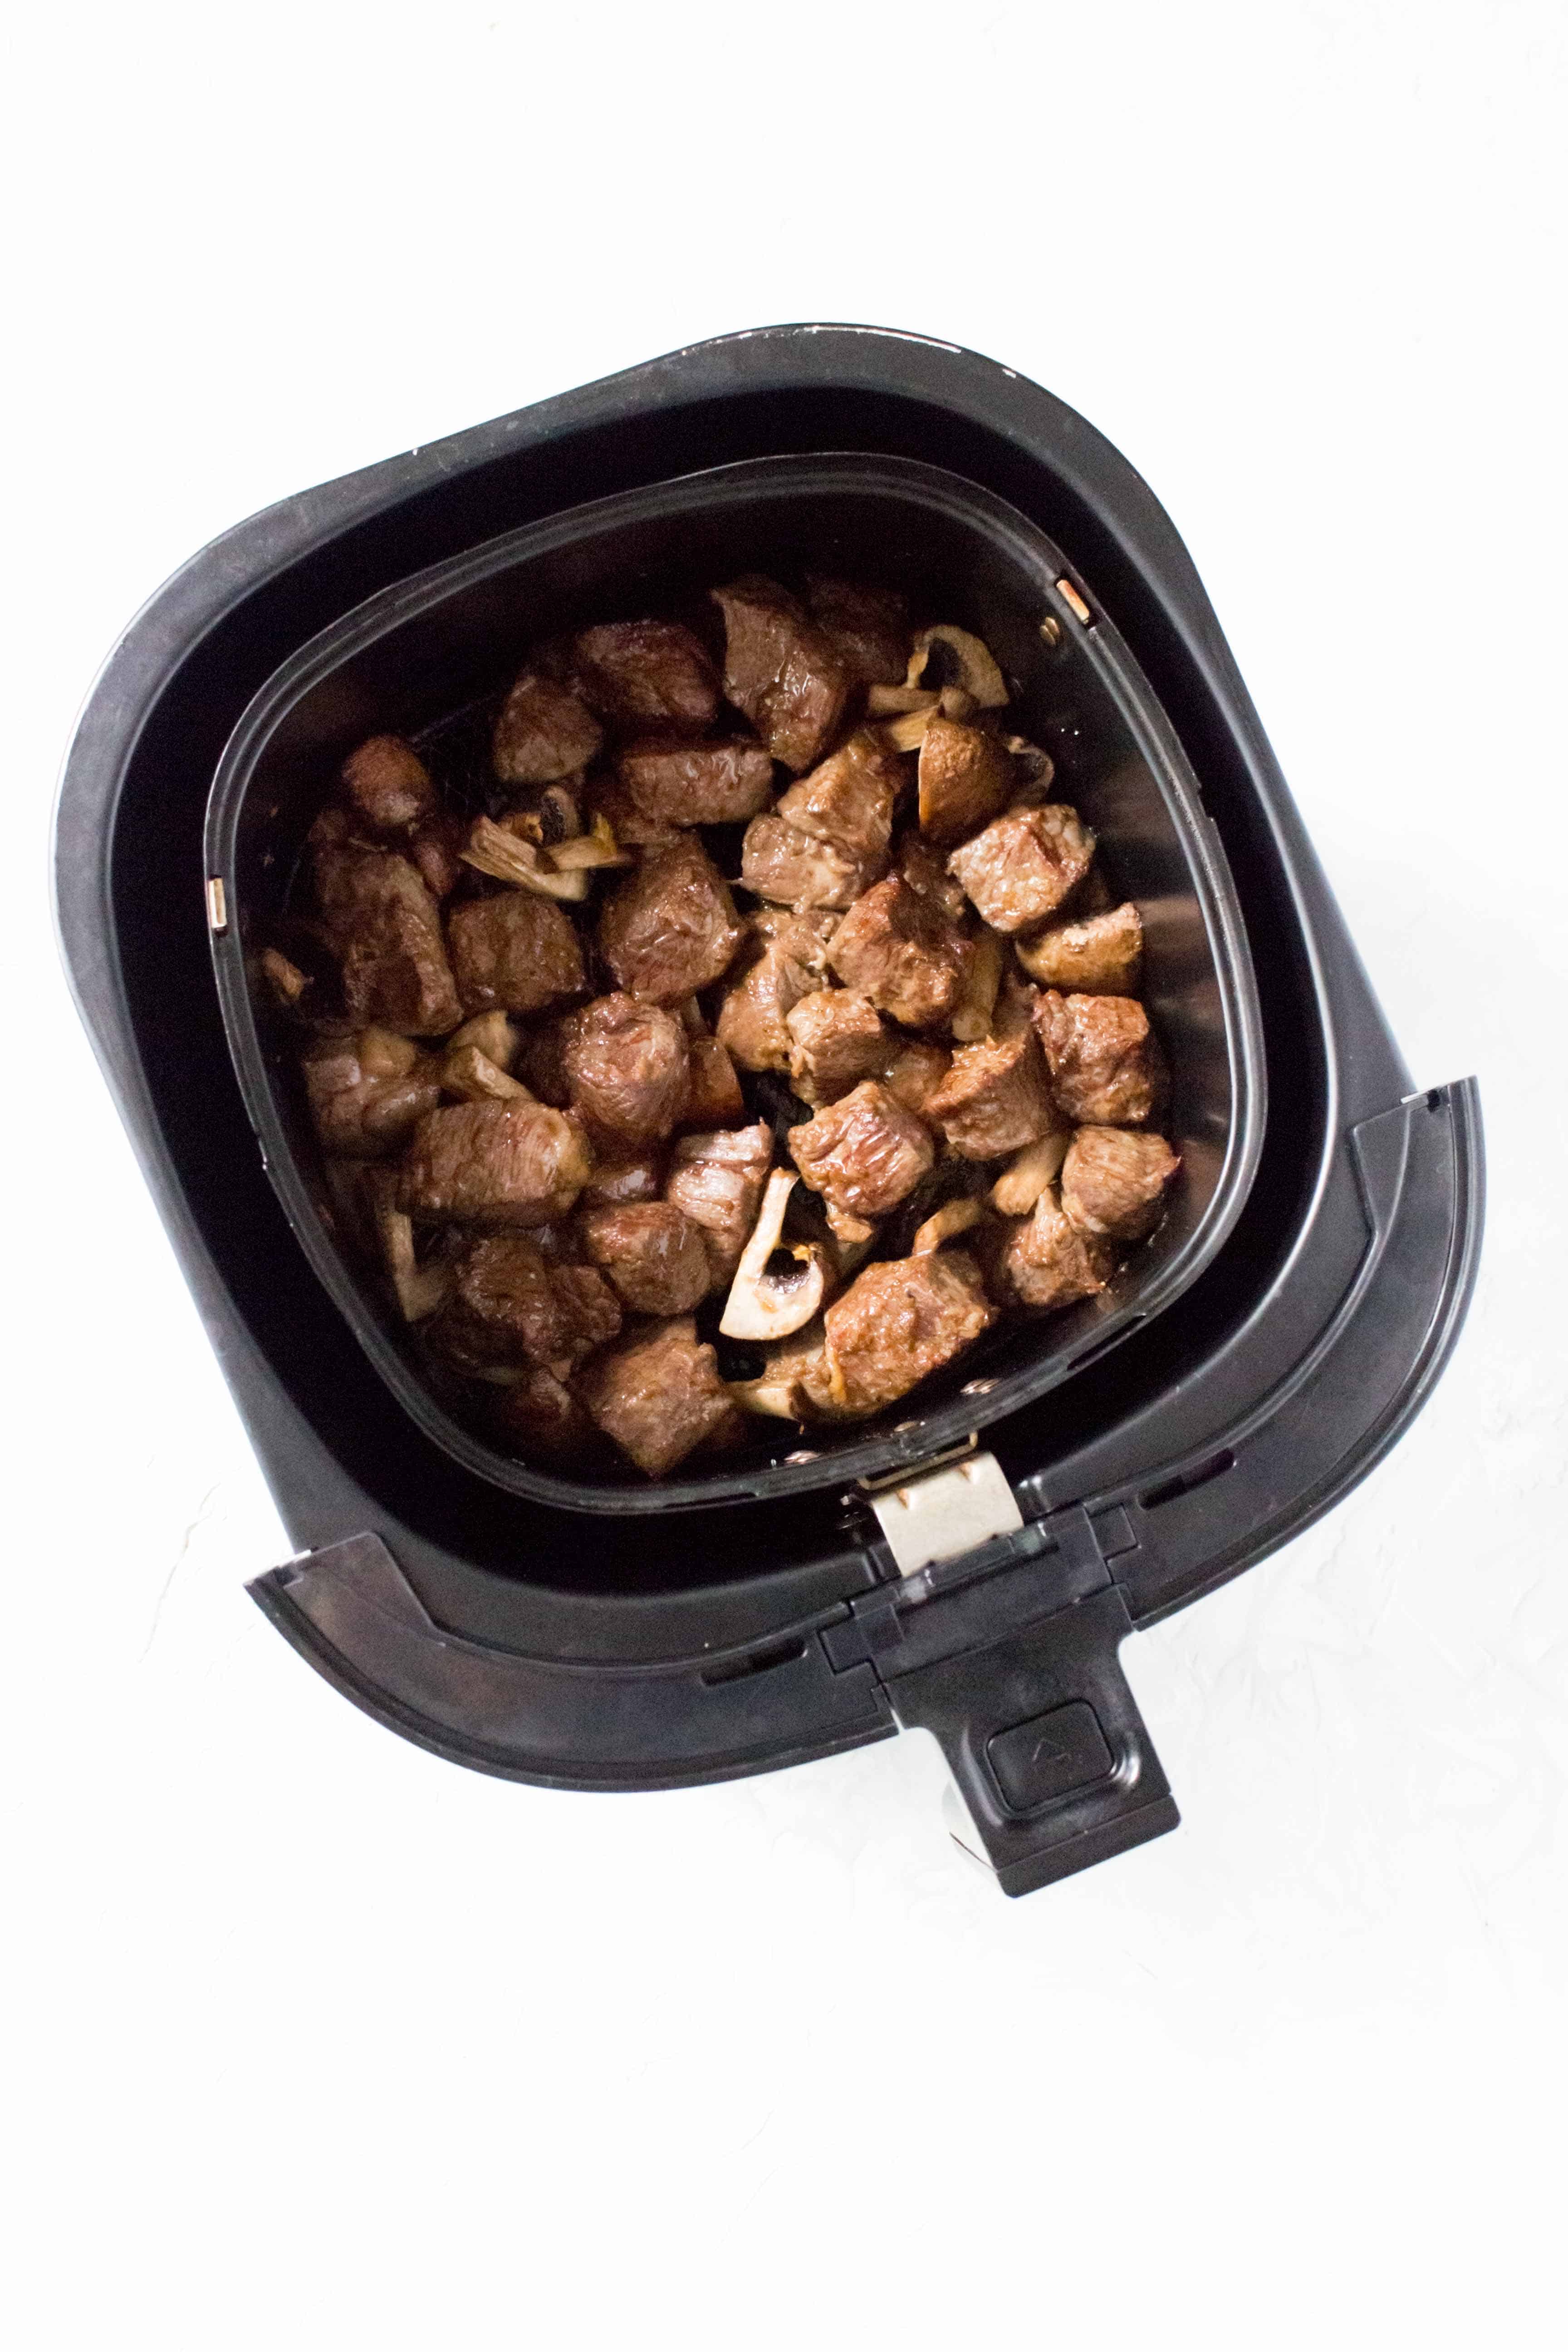 Overheat view of air fried steak bites and mushrooms in an air fryer basket.